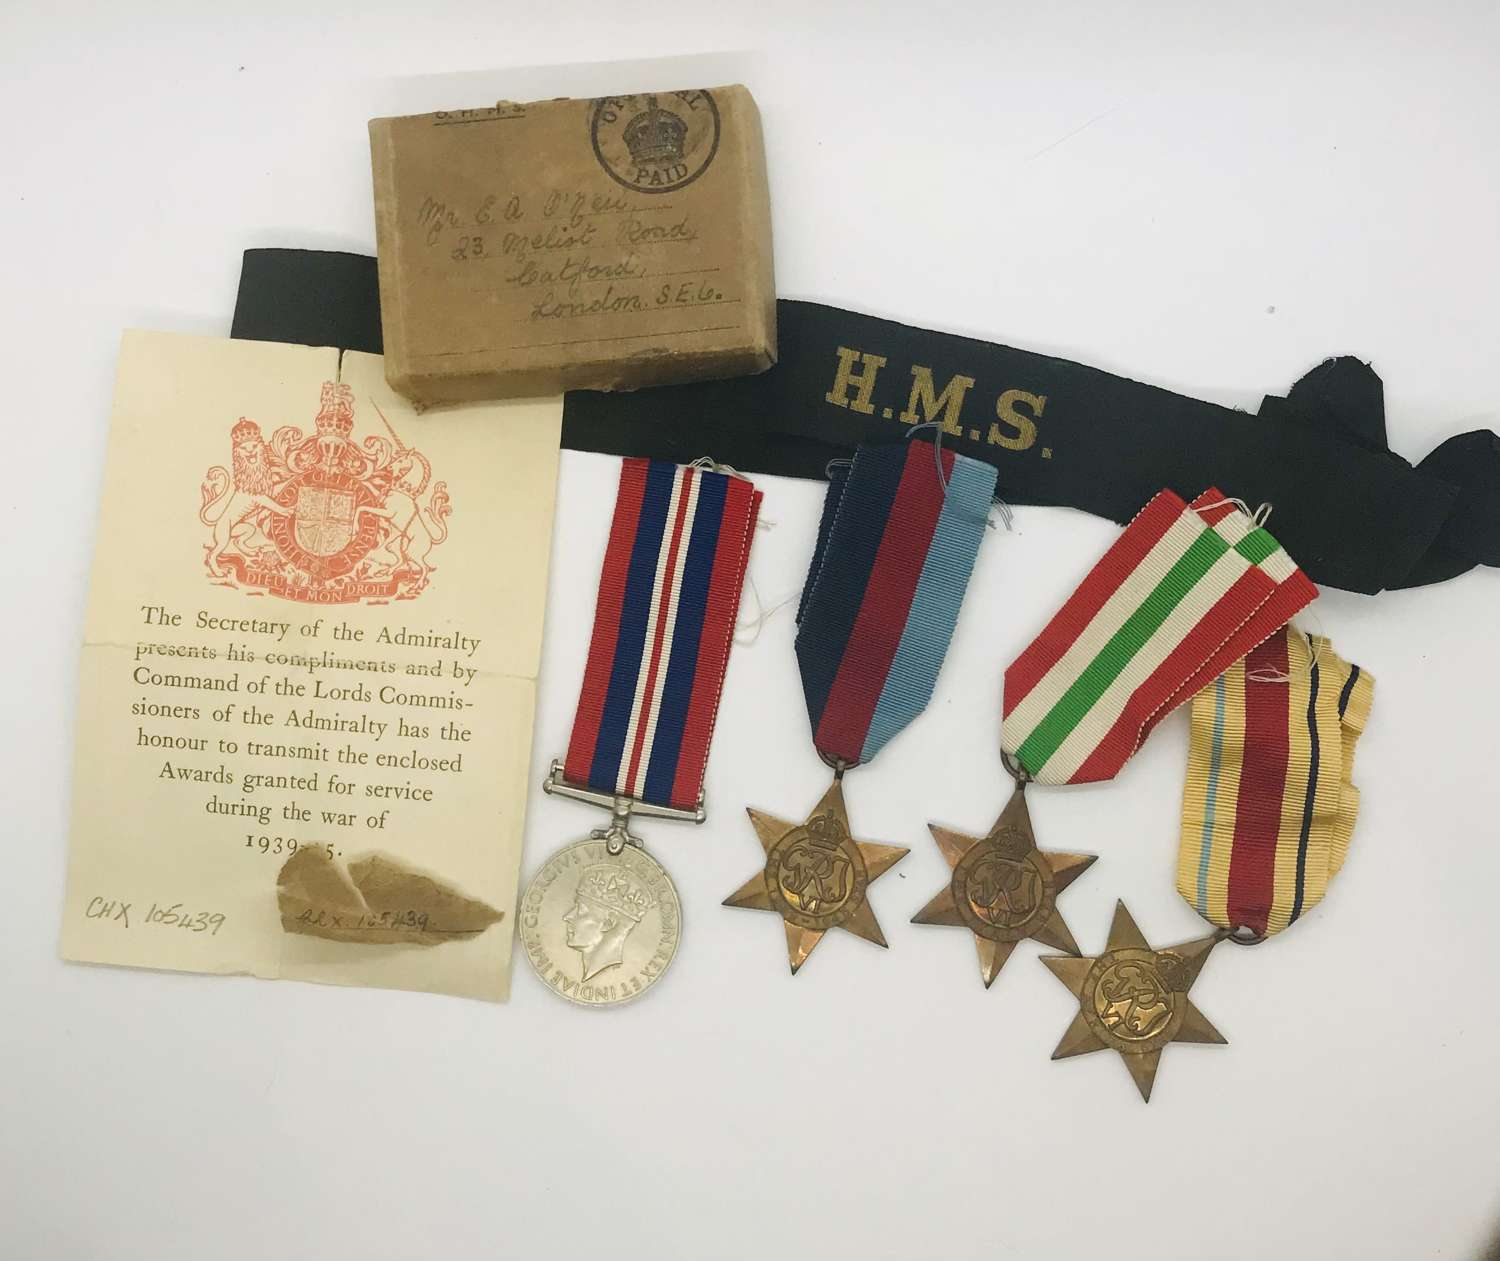 Royal Navy boxed medals and cap tally